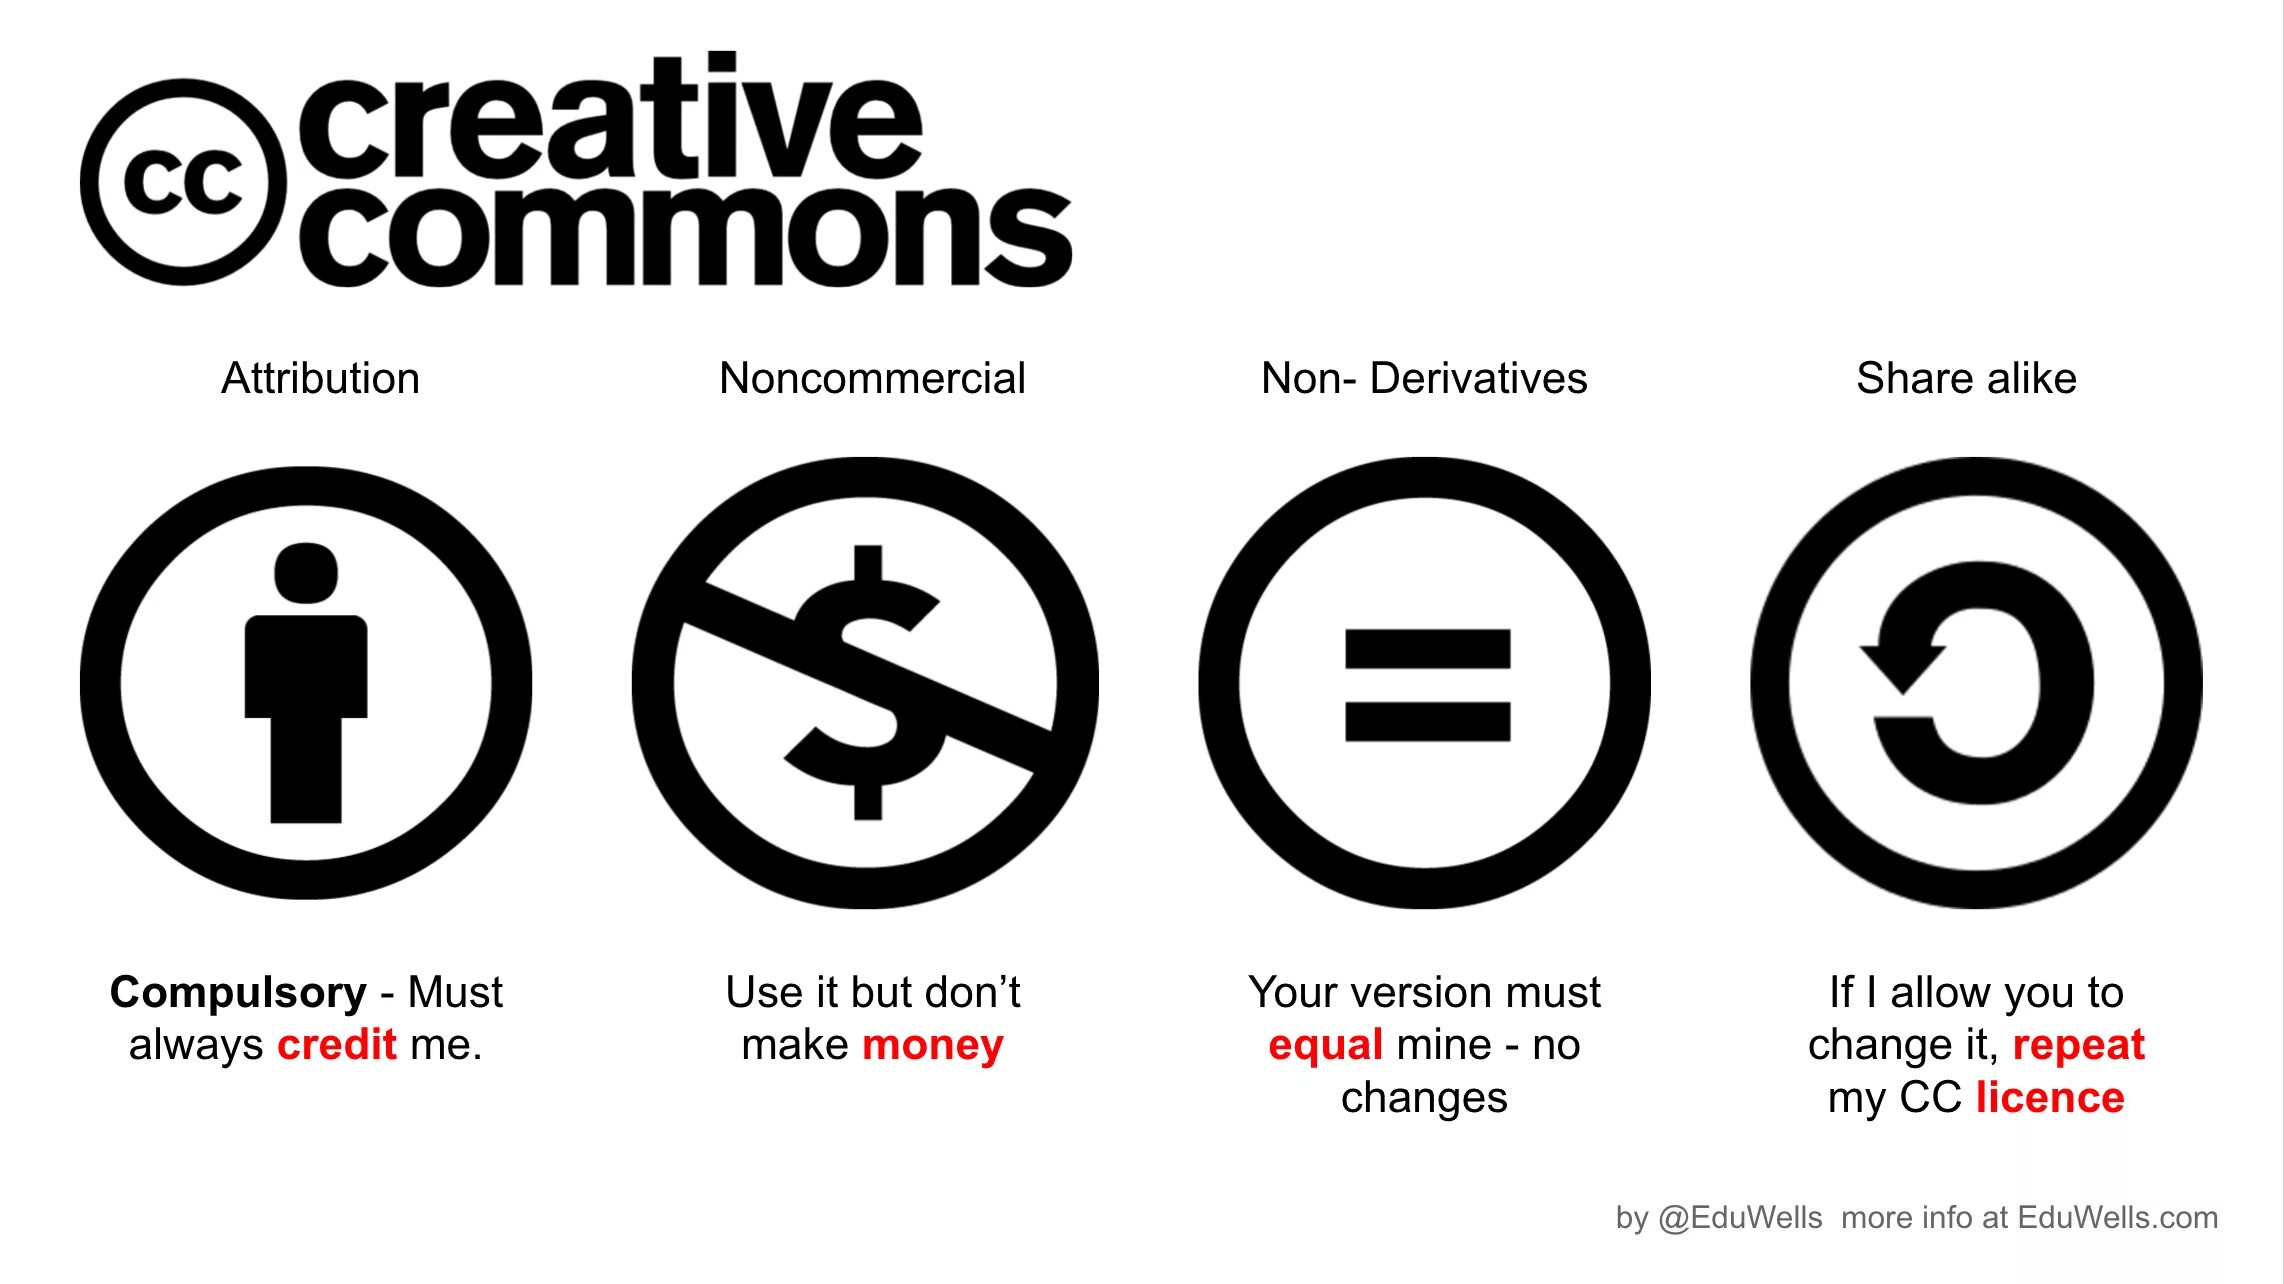 Creative commons license. Creative Commons. Creative Commons значки. Лицензии креатив Коммонс. Creative Commons Attribution.